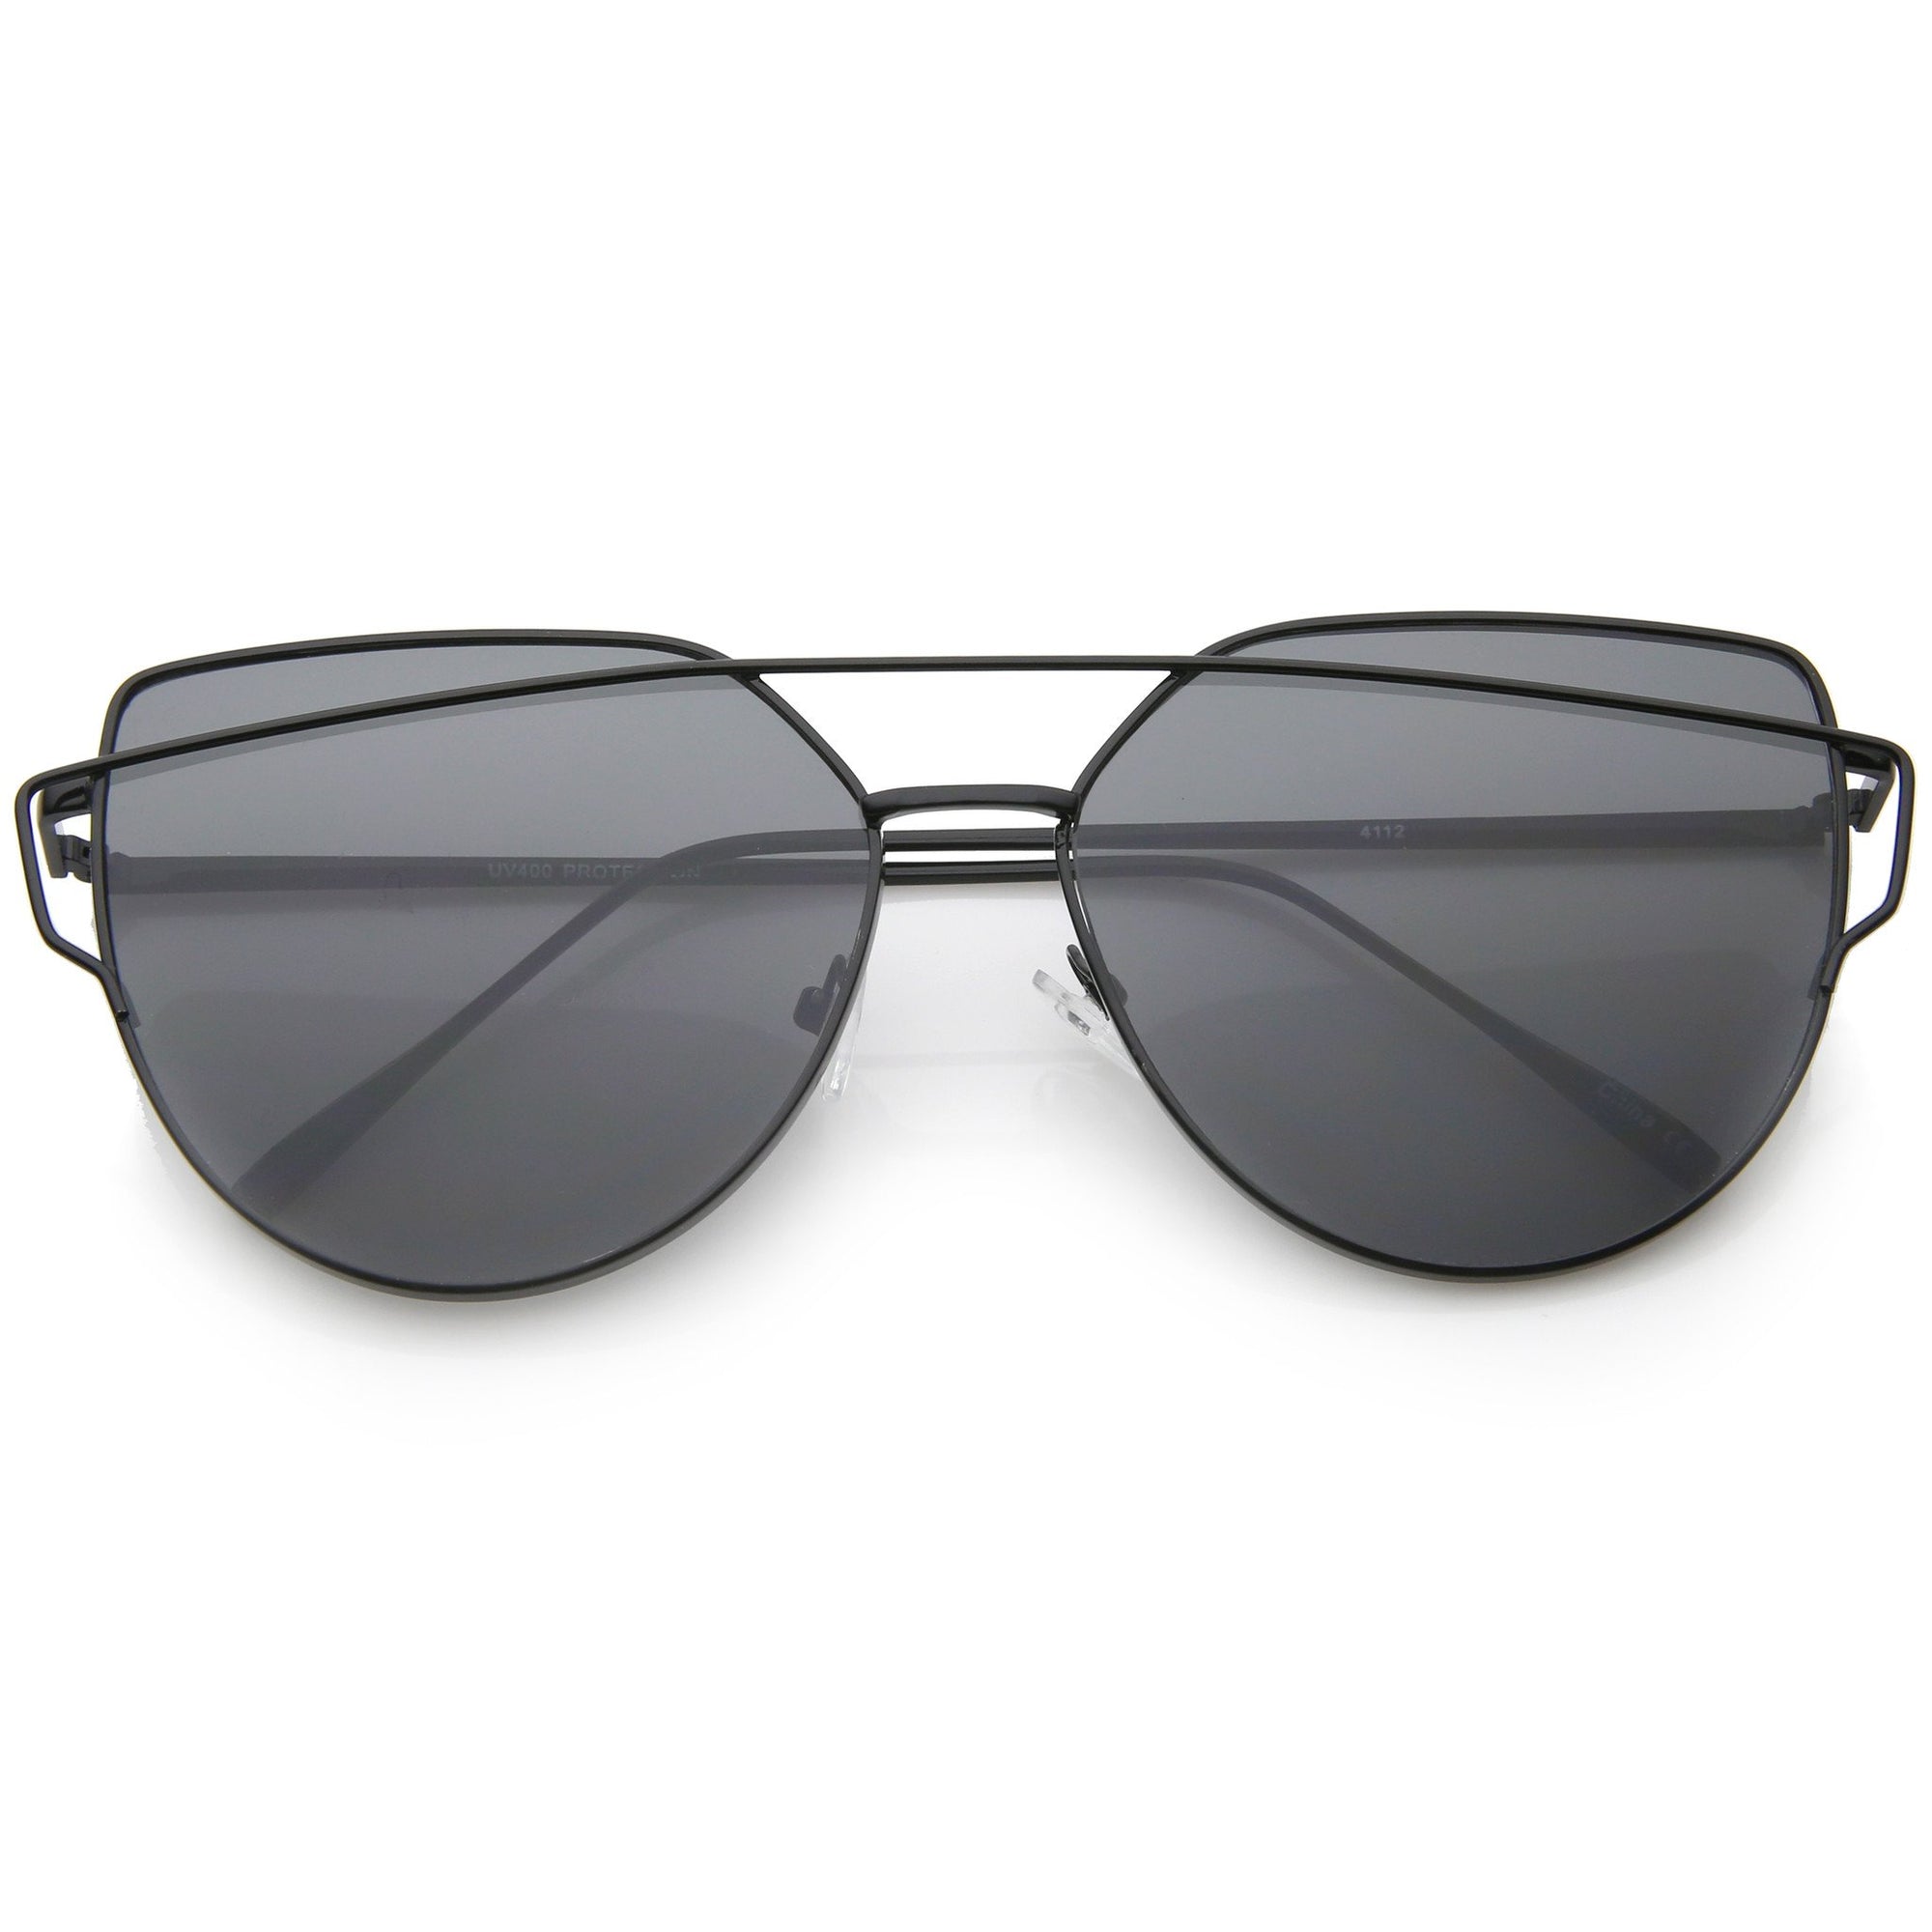 Women's Oversize Thin Temple Flat Lens Sunglasses - zeroUV